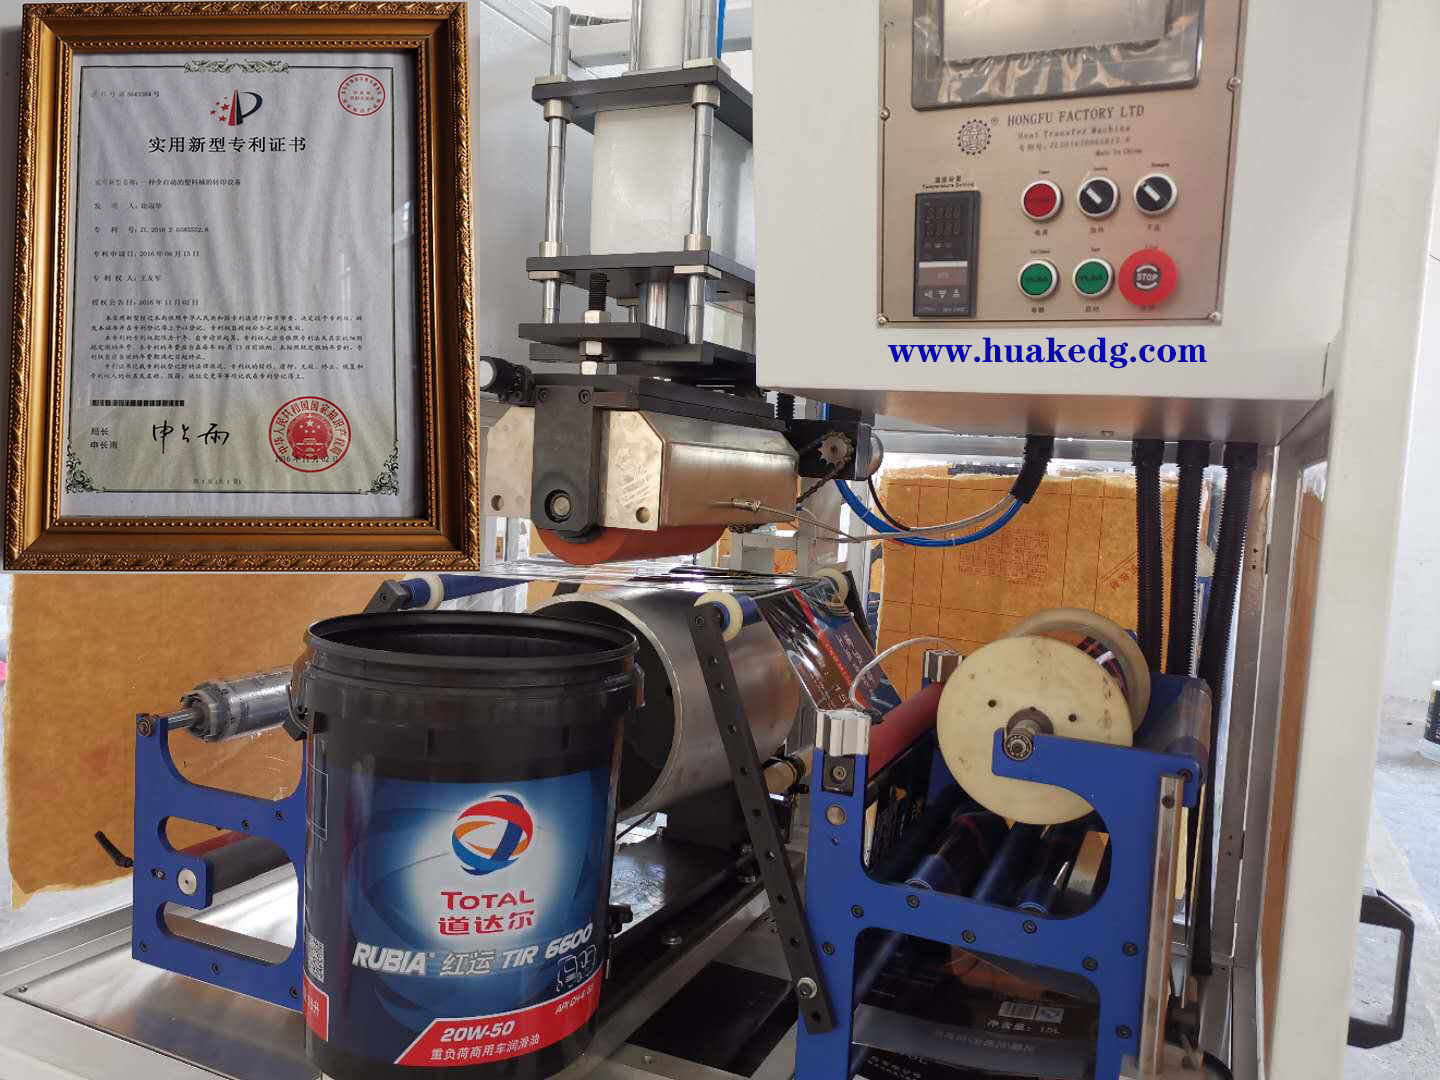 Heat Transfer Machine for Plastic Buckets